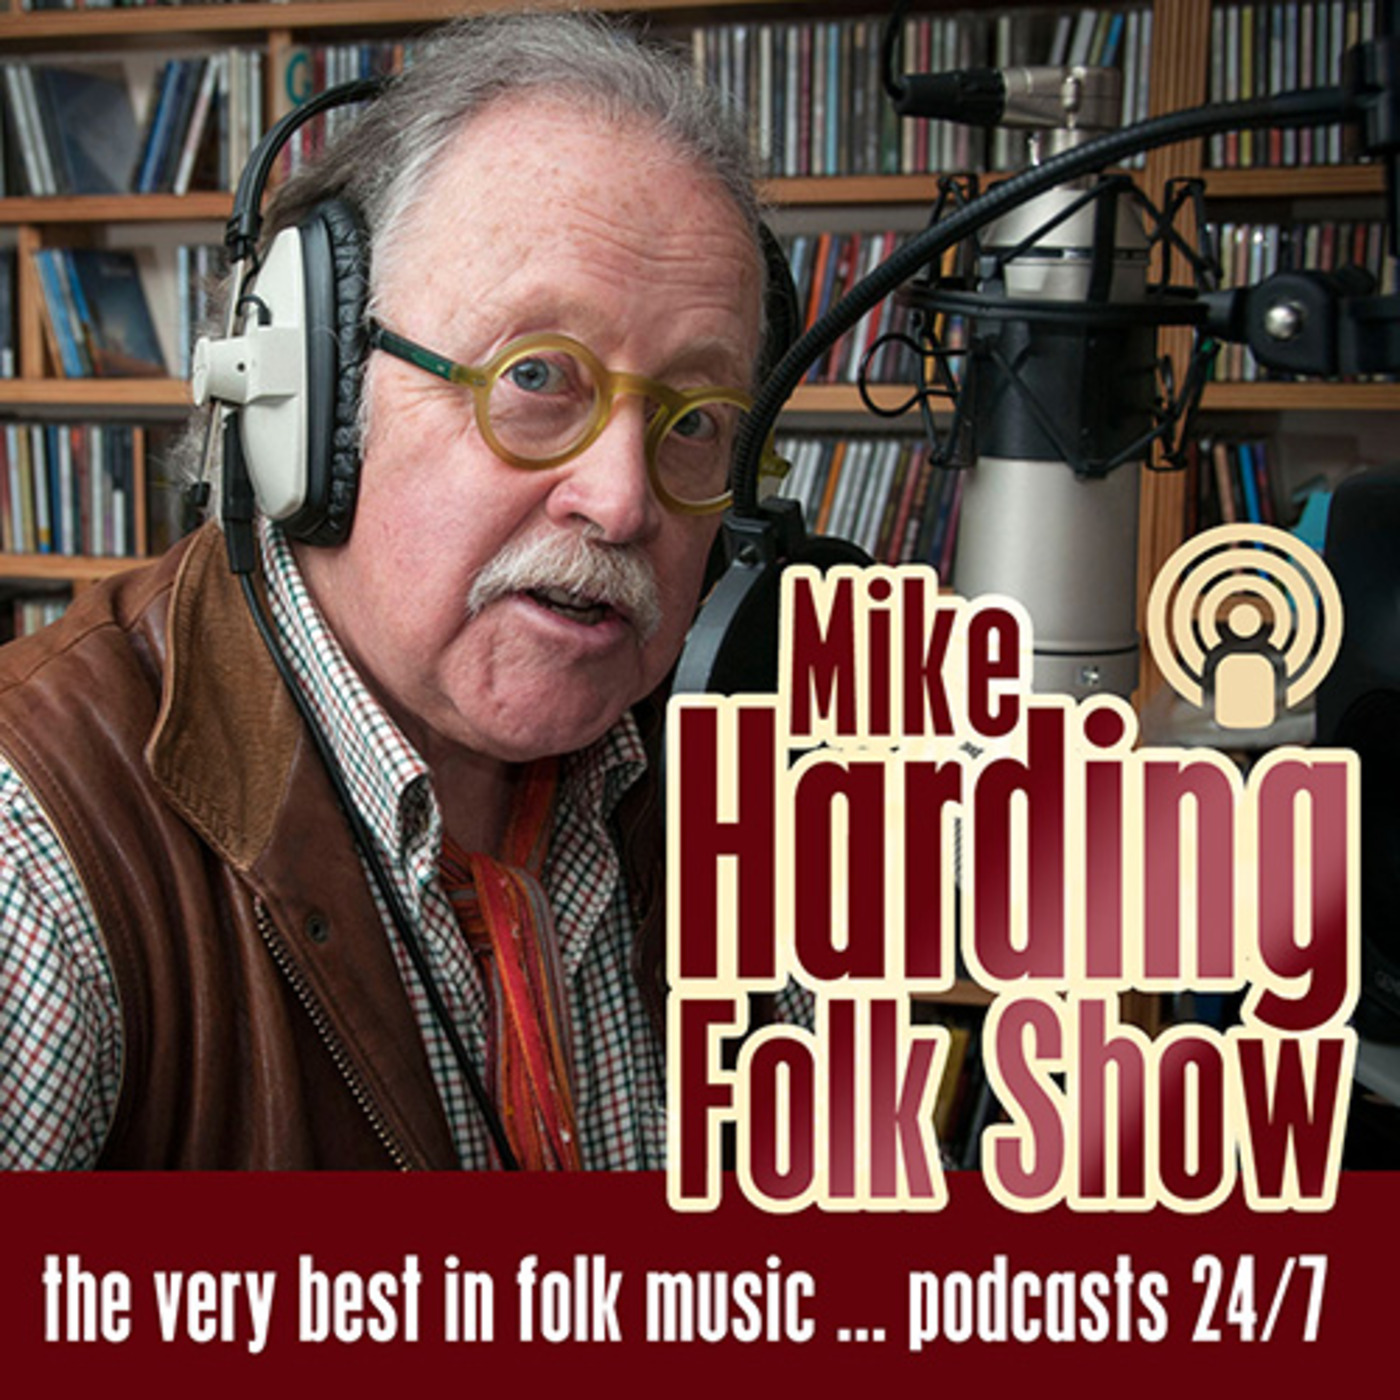 Mike Harding Folk Show 295